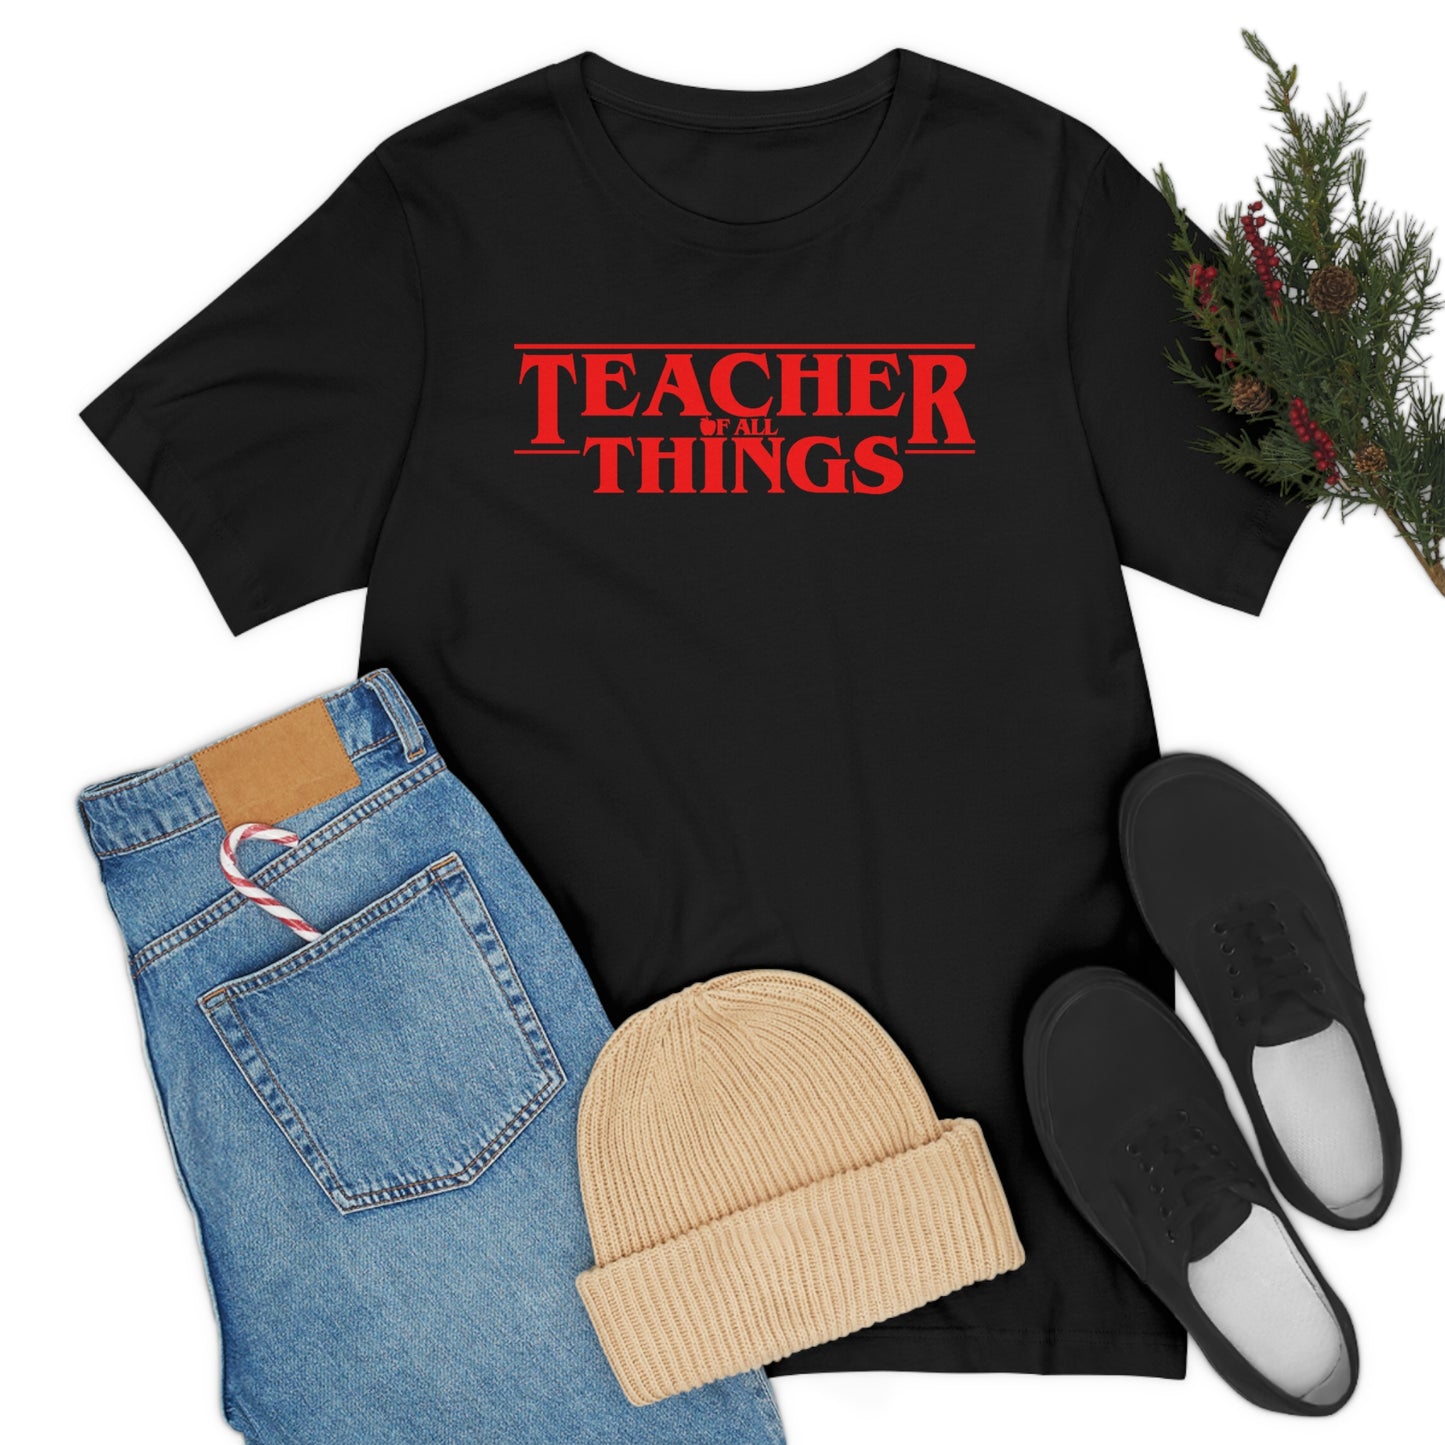 Teacher Things T-shirt, Stranger Teacher Things Shirt, Funny Teacher Shirt, Series Inspired Shirts, Trendy Shirts, Best School Shirts